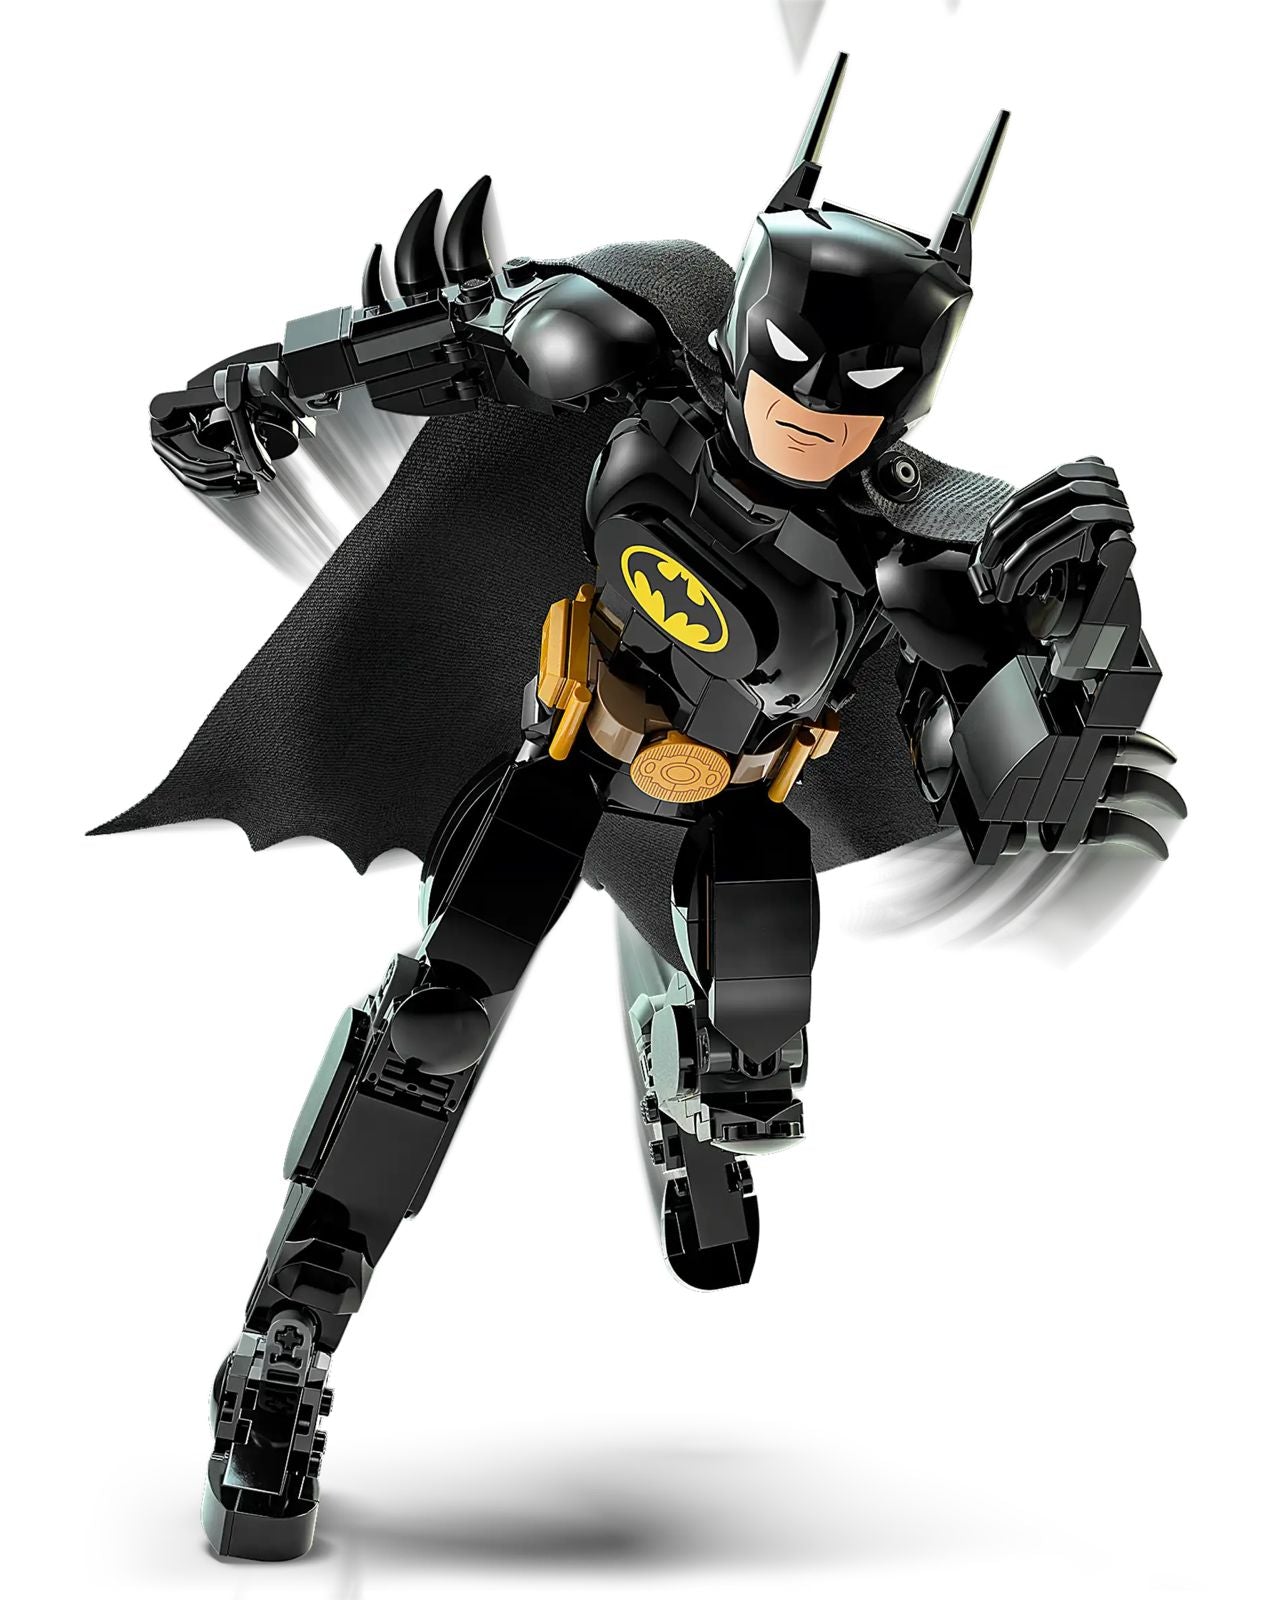 Lego Batman Figura Para Construir Batman 76259